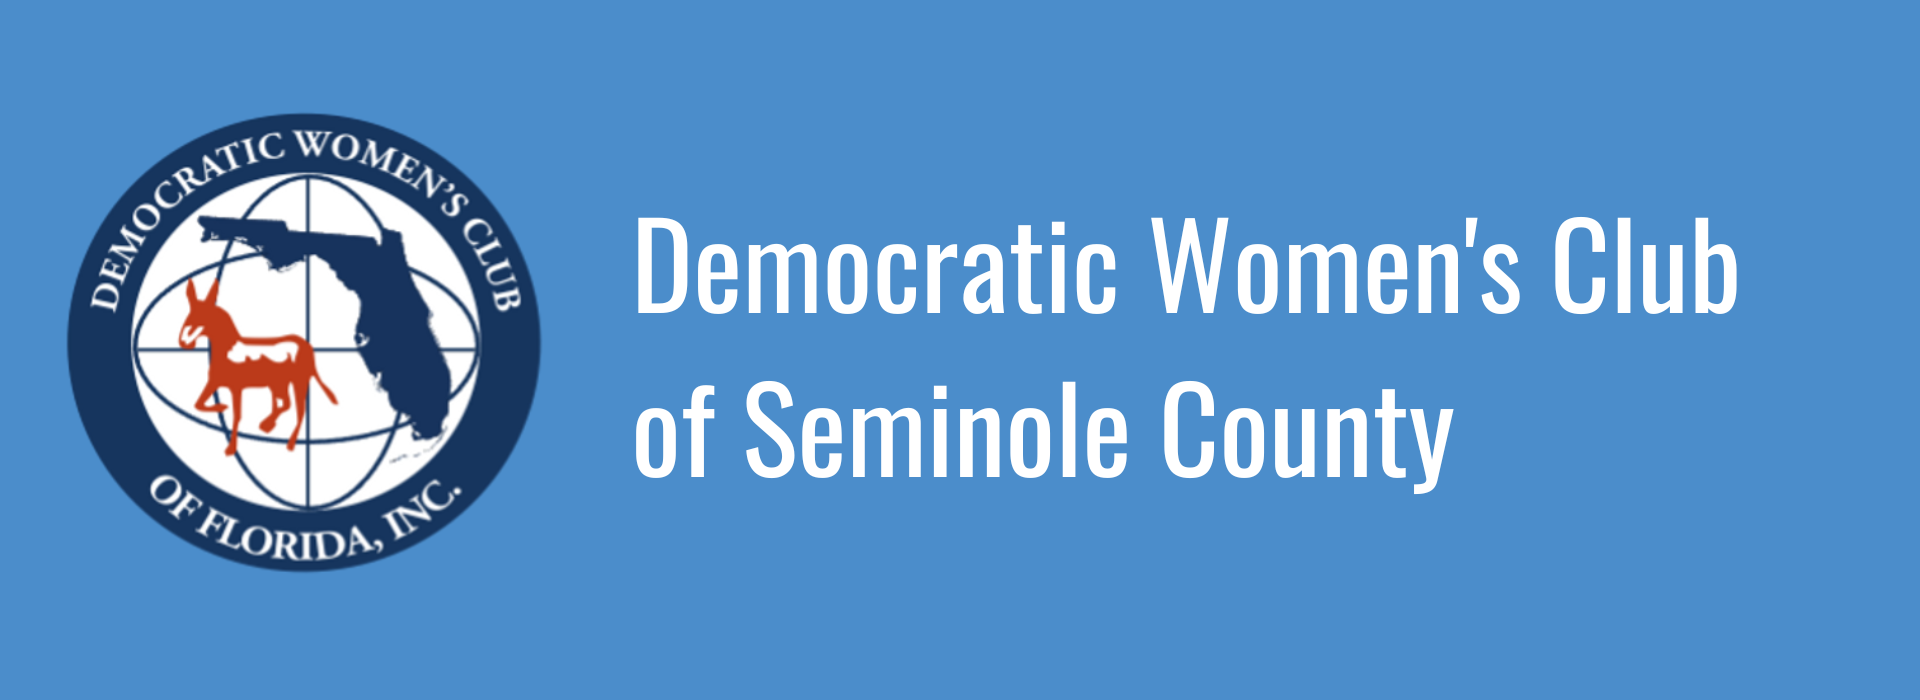 Democratic Women's Club of Seminole County DWCSC